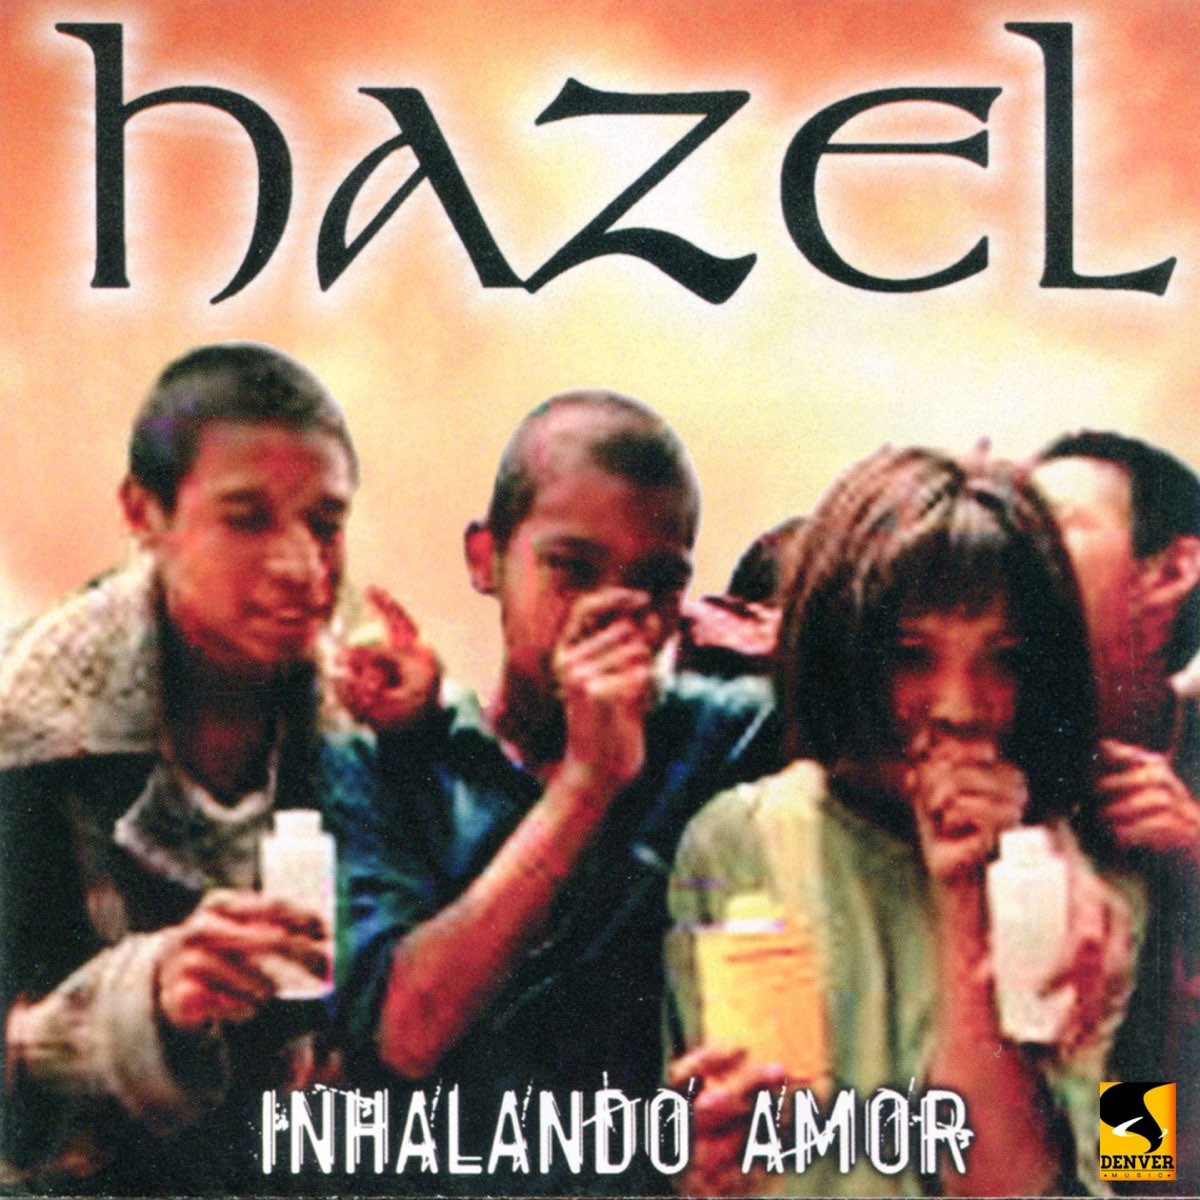 Inhalando Amor by Hazel on Apple Music